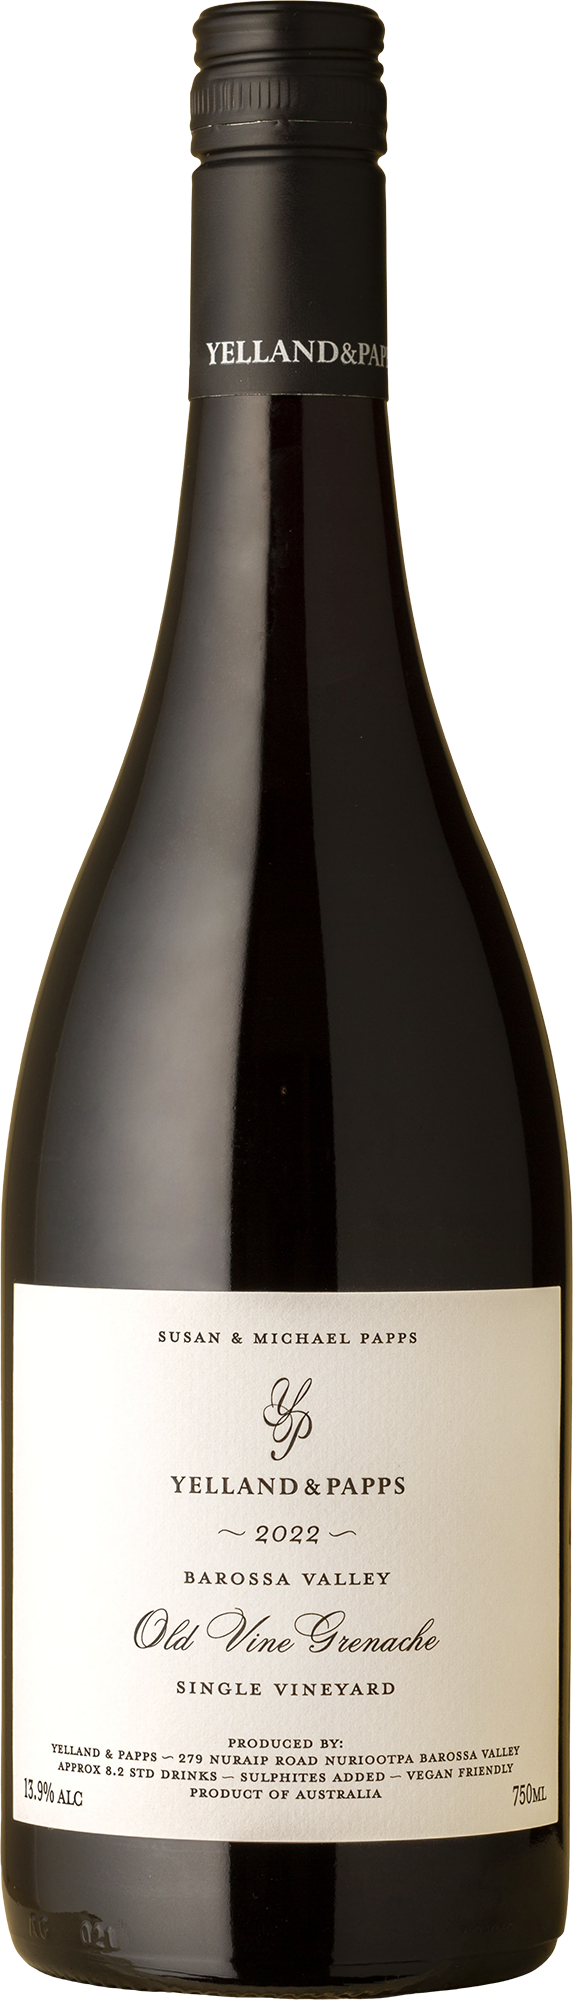 Yelland & Papps - Single Vineyard Old Vine Grenache 2022 Red Wine